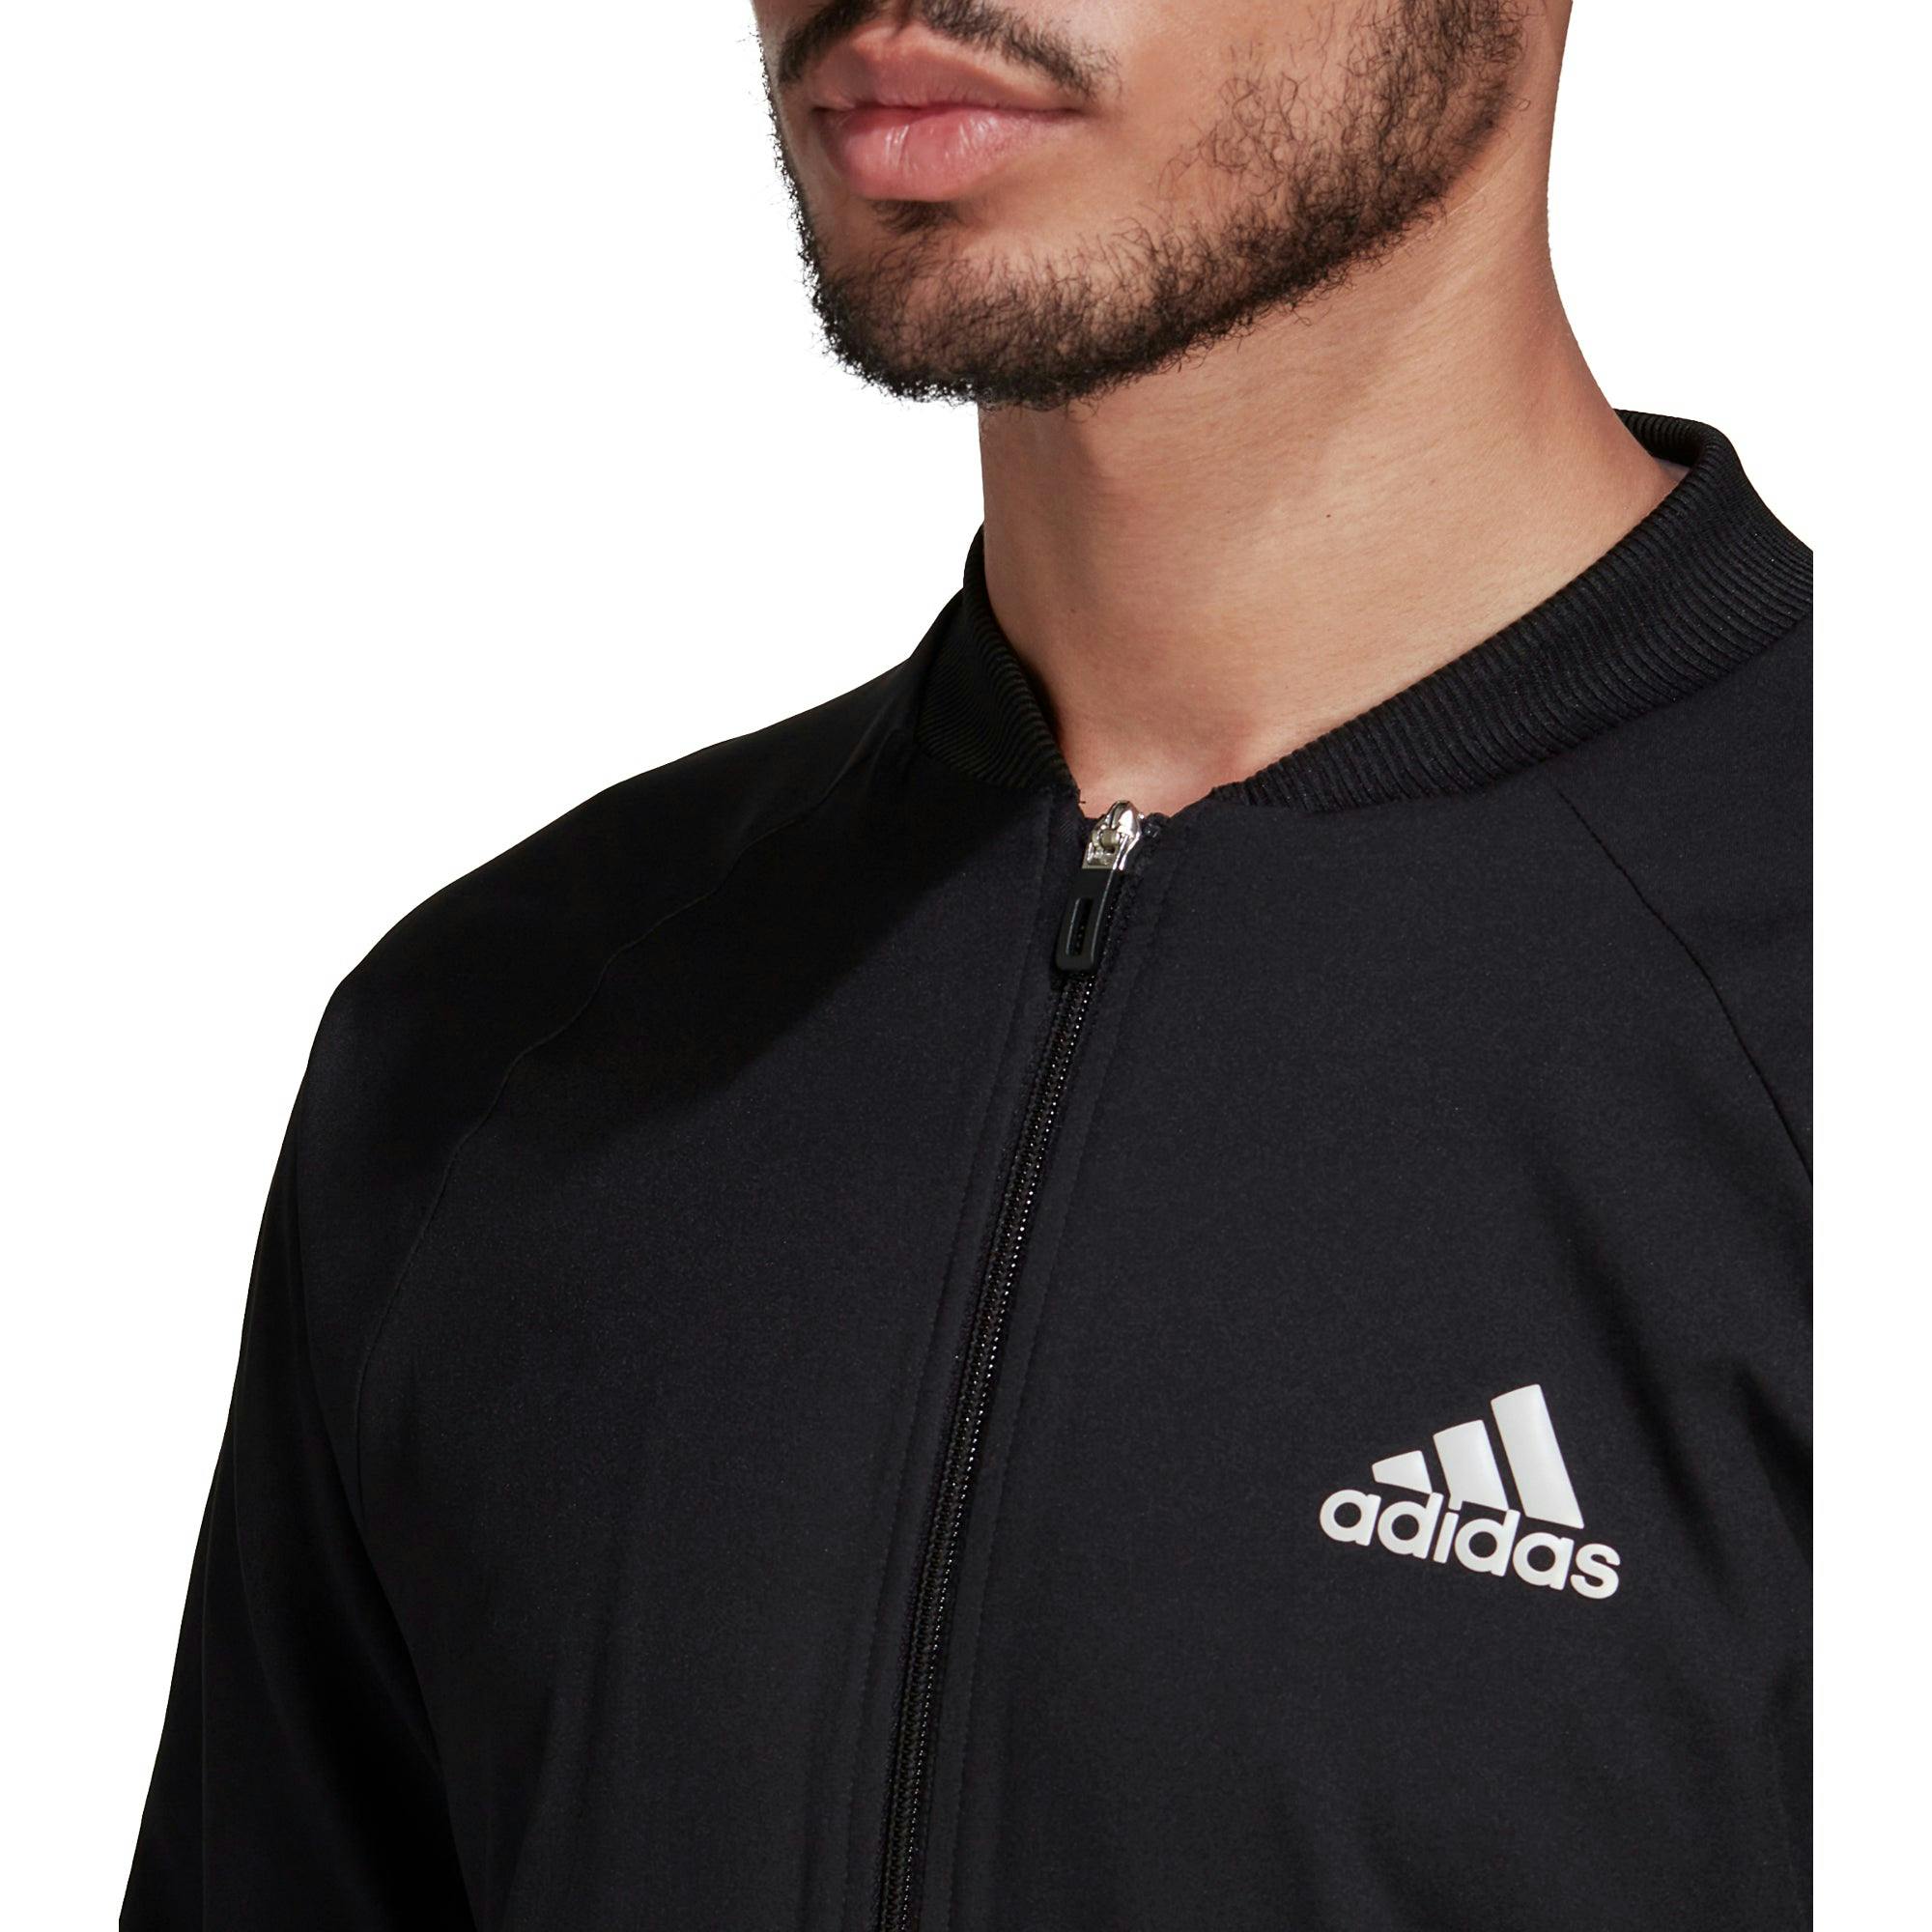 Adidas Stretch Woven Mens Tennis Jacket - WHITE/BLACK 100 / S